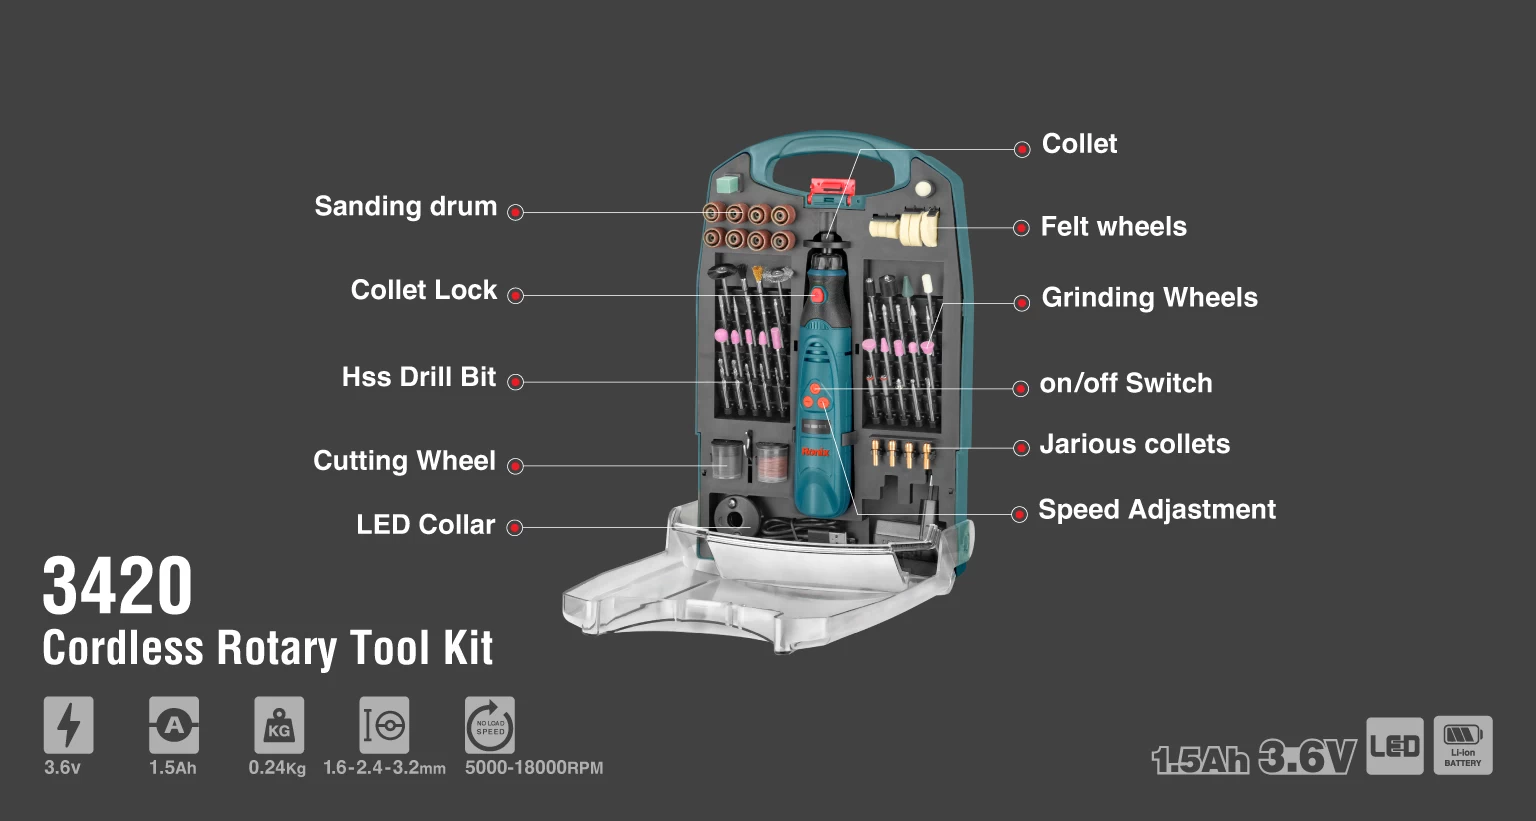 Cordless Rotary Tool Kit, 3.6V, 1.6/2.4/3.2mm_details